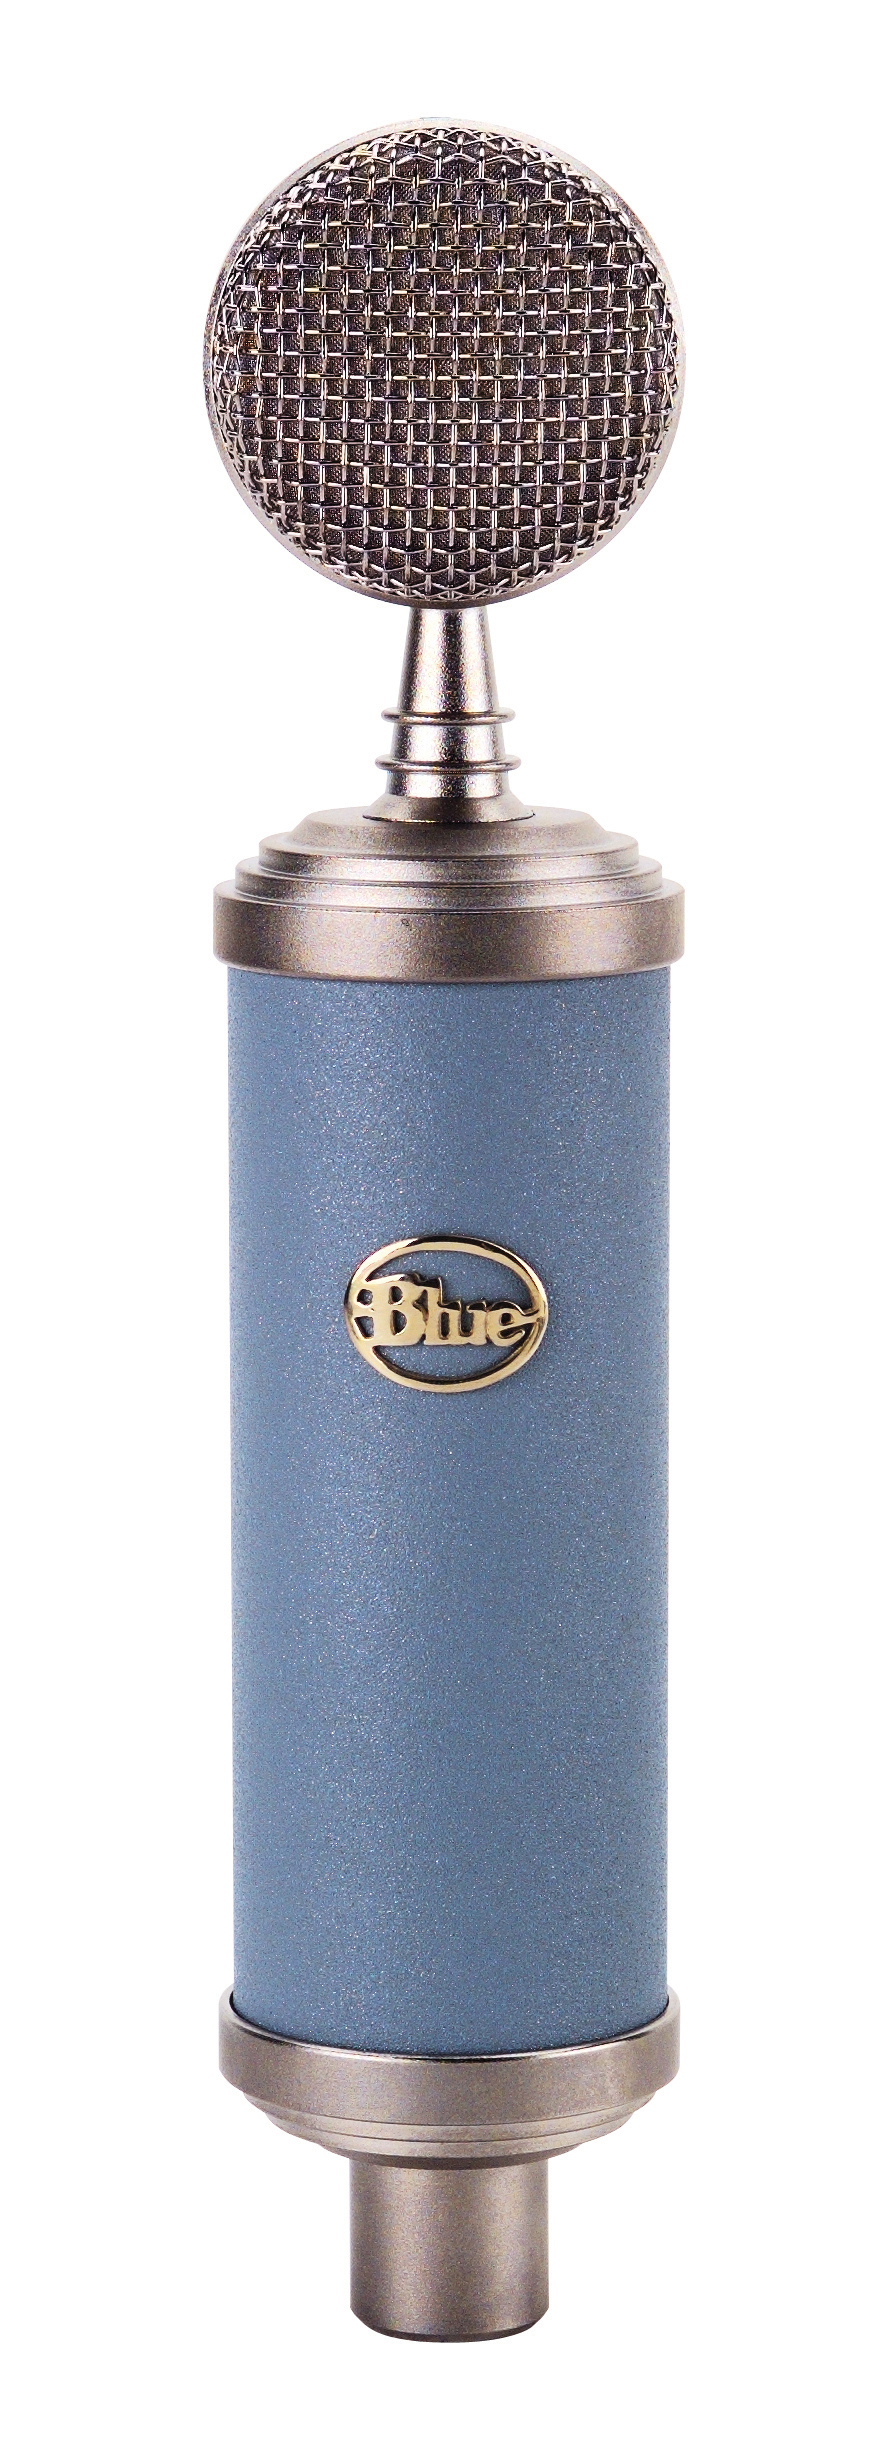 BLUE BLUE BlueBird Condenser Microphone, Cardioid